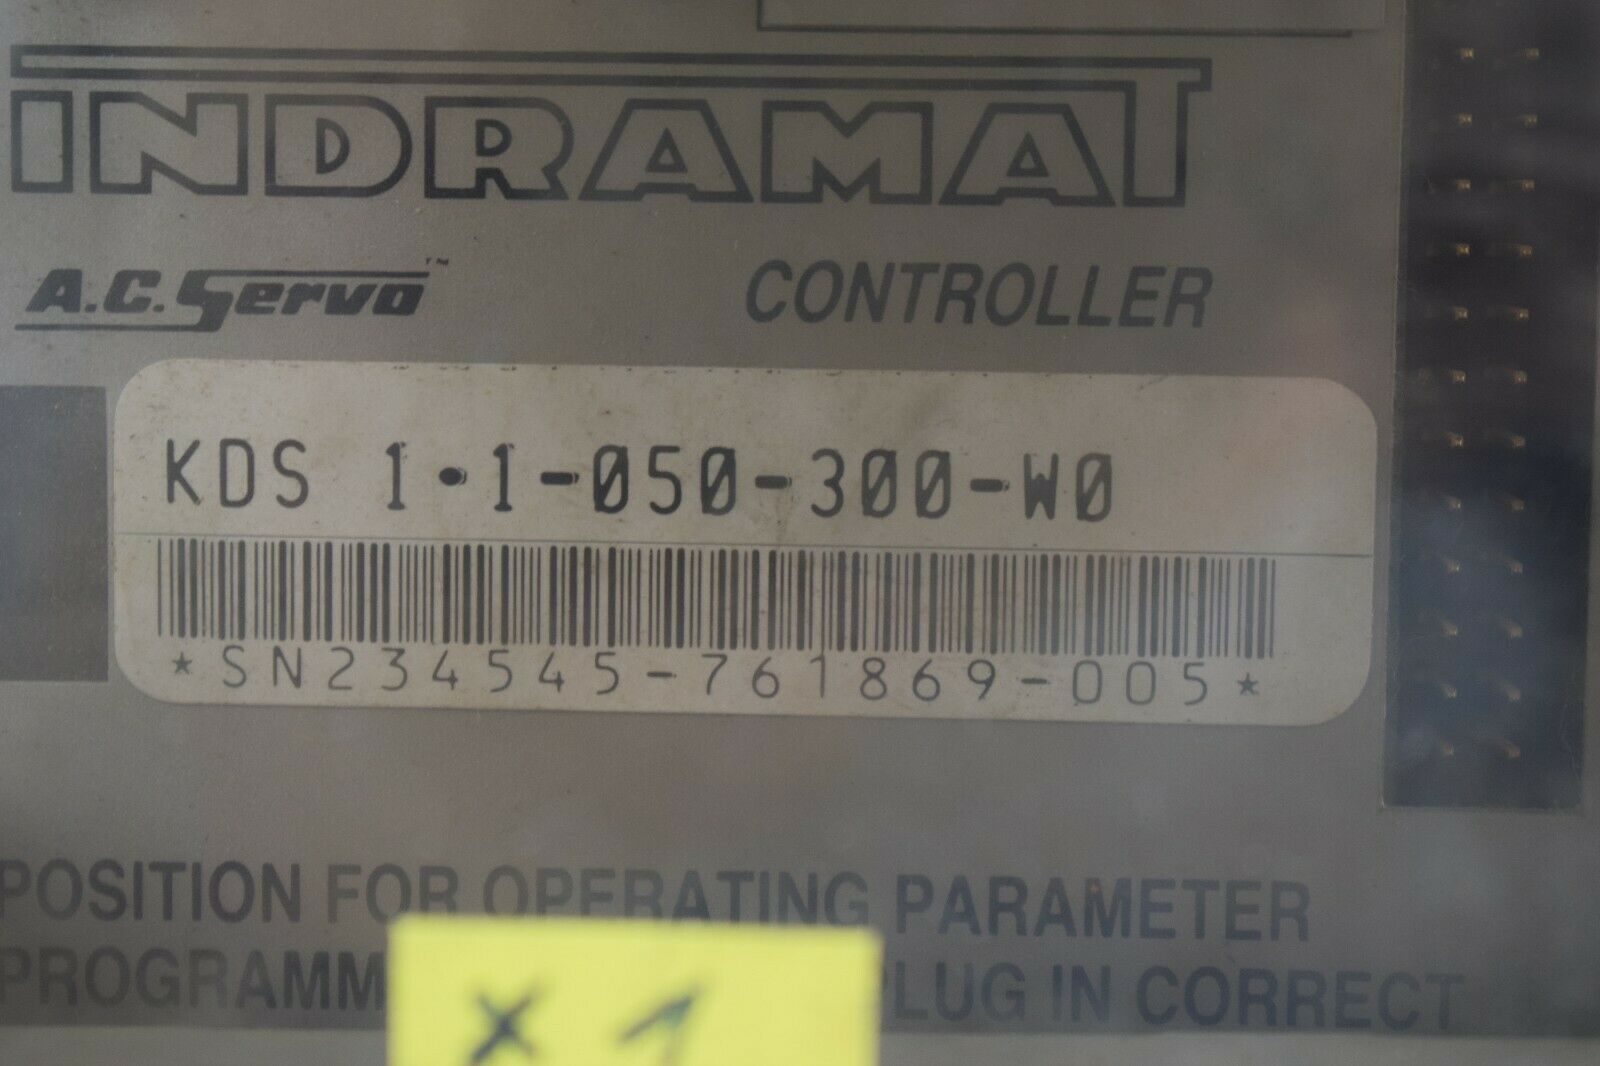 Indramat A.C.Servo Controller KDS 1.1-050-300-W0 inkl. MOD3/1X094-007 